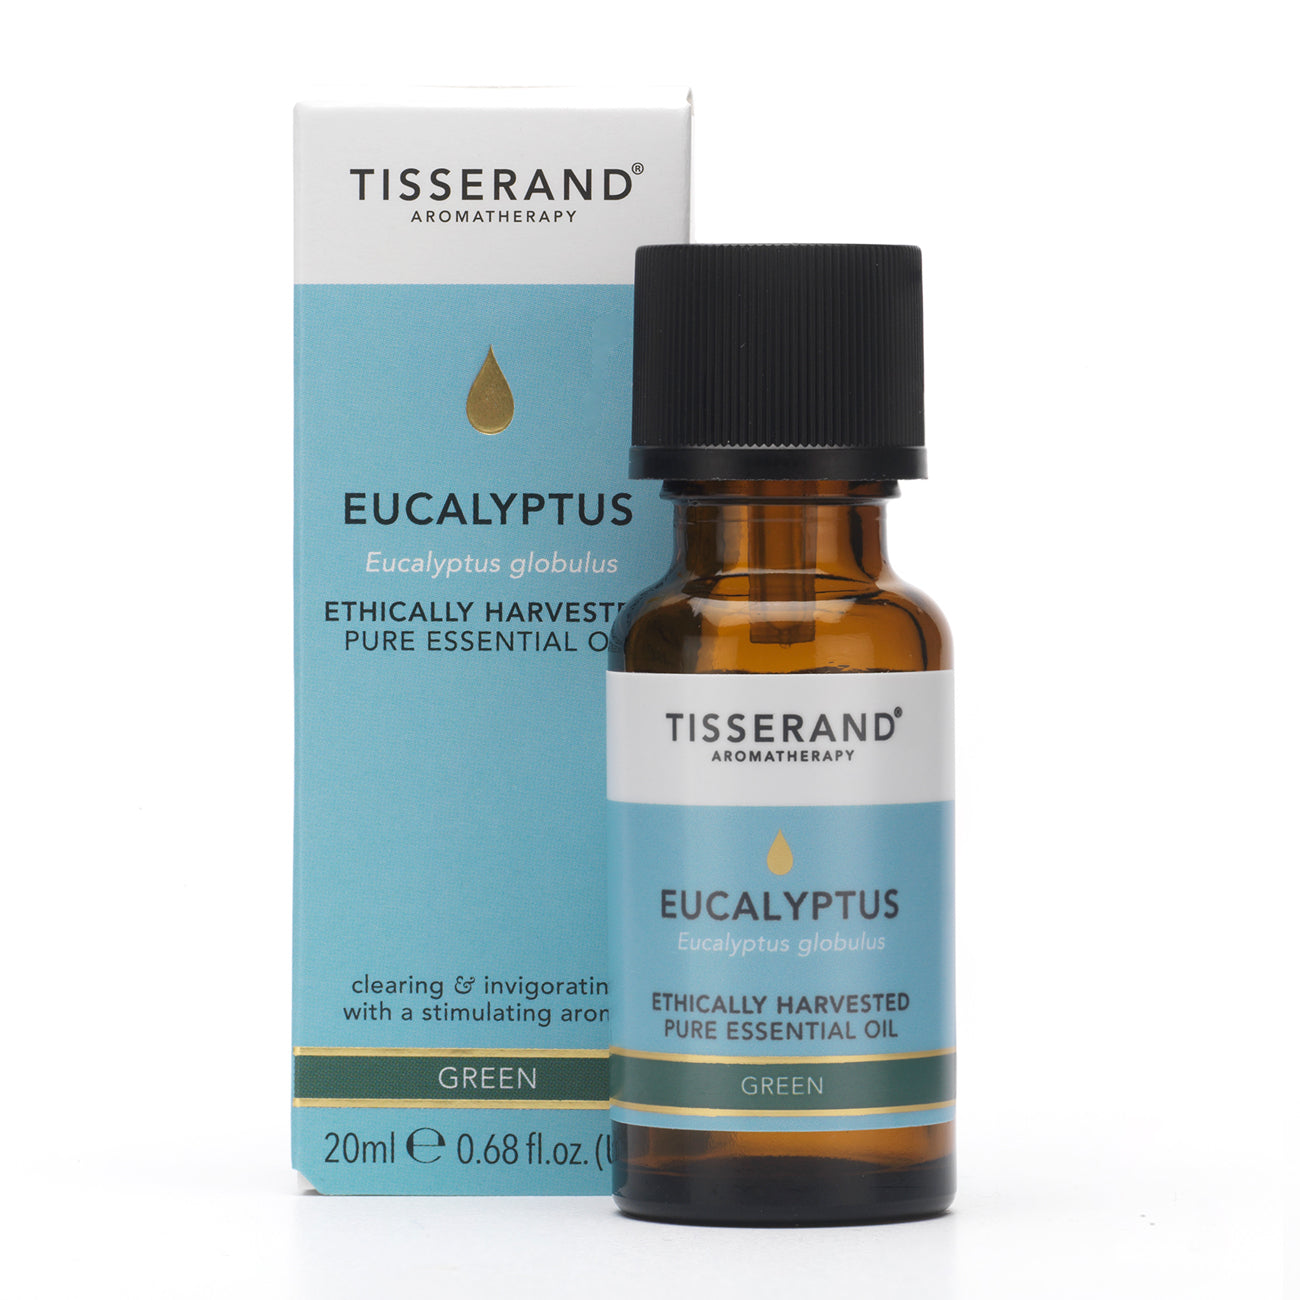 Tisserand Aromatherapy Eucalyptus Ethically Harvested Pure Essential Oil